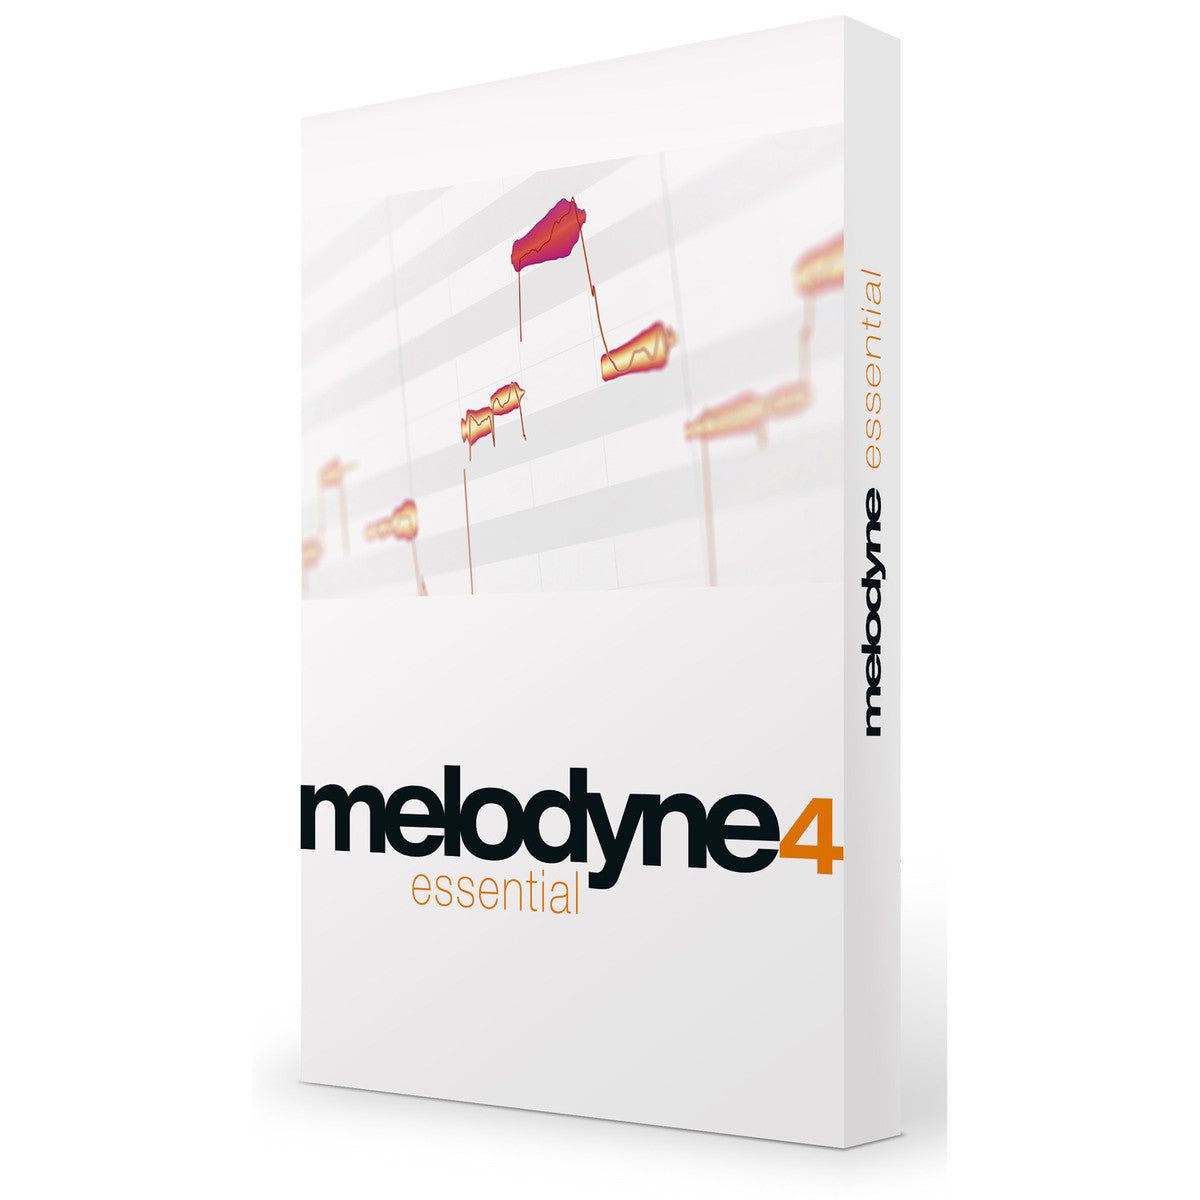 Celemony Melodyne 5 Essential (Download)